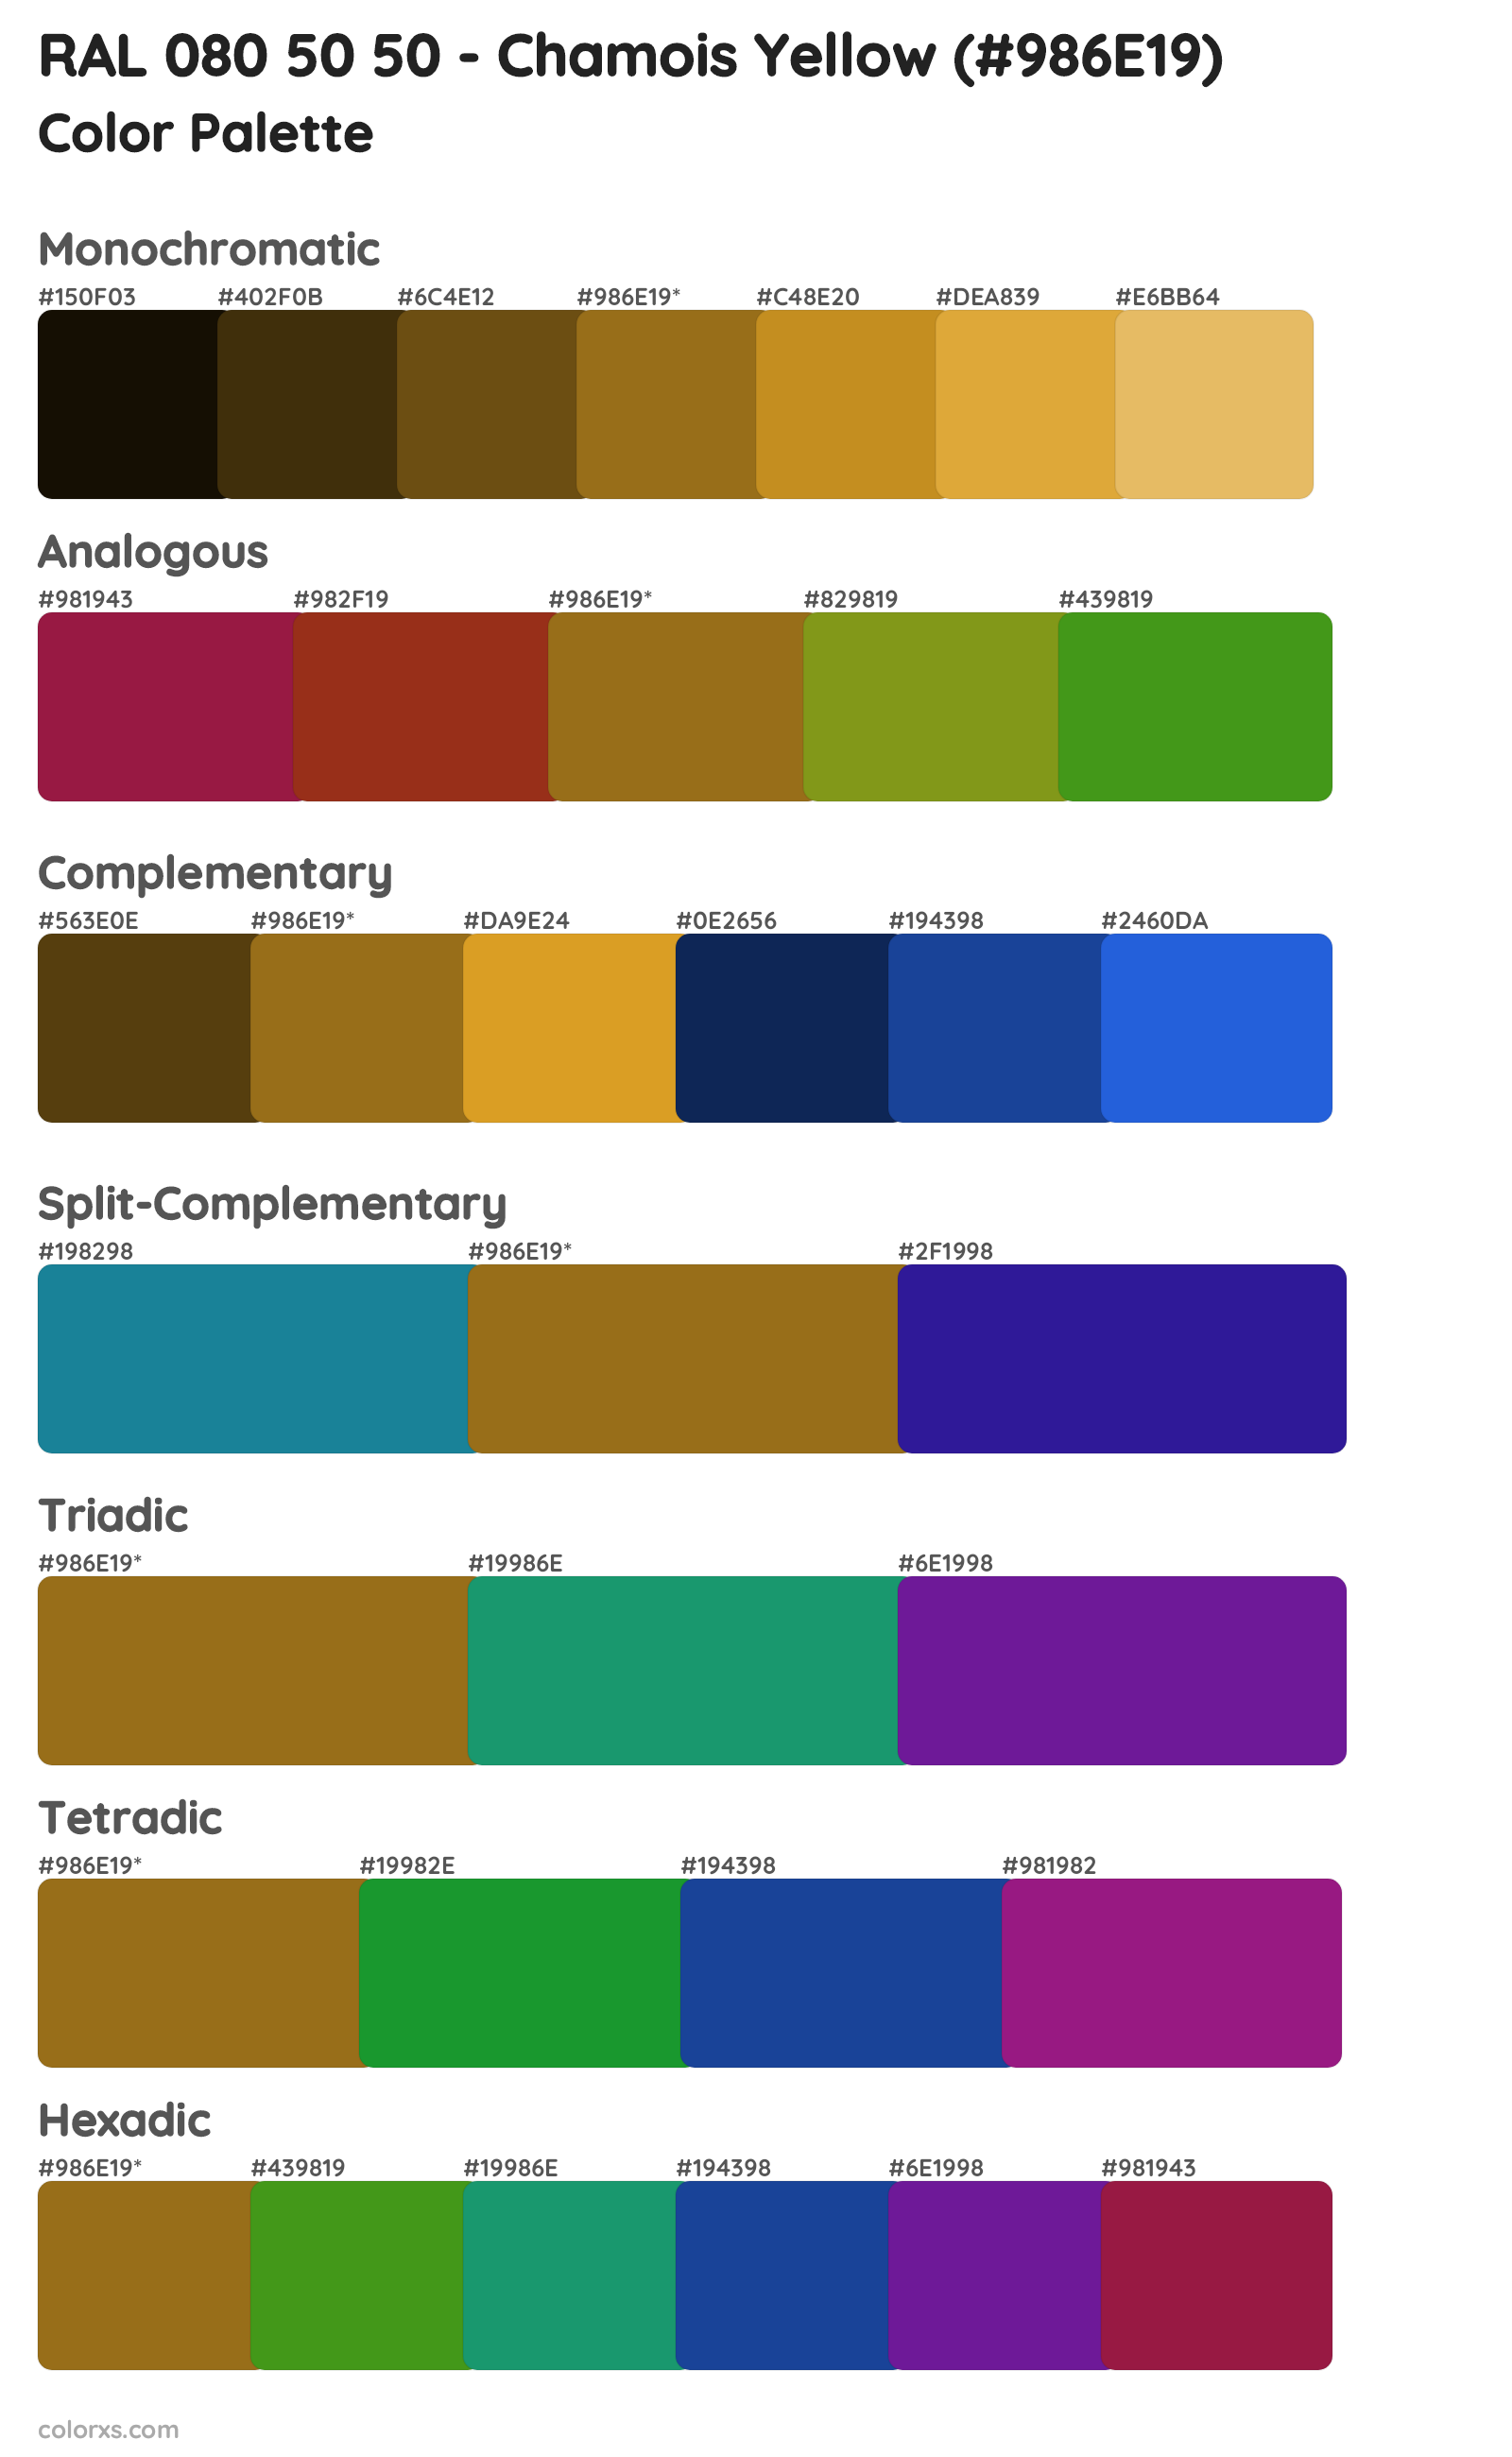 RAL 080 50 50 - Chamois Yellow Color Scheme Palettes